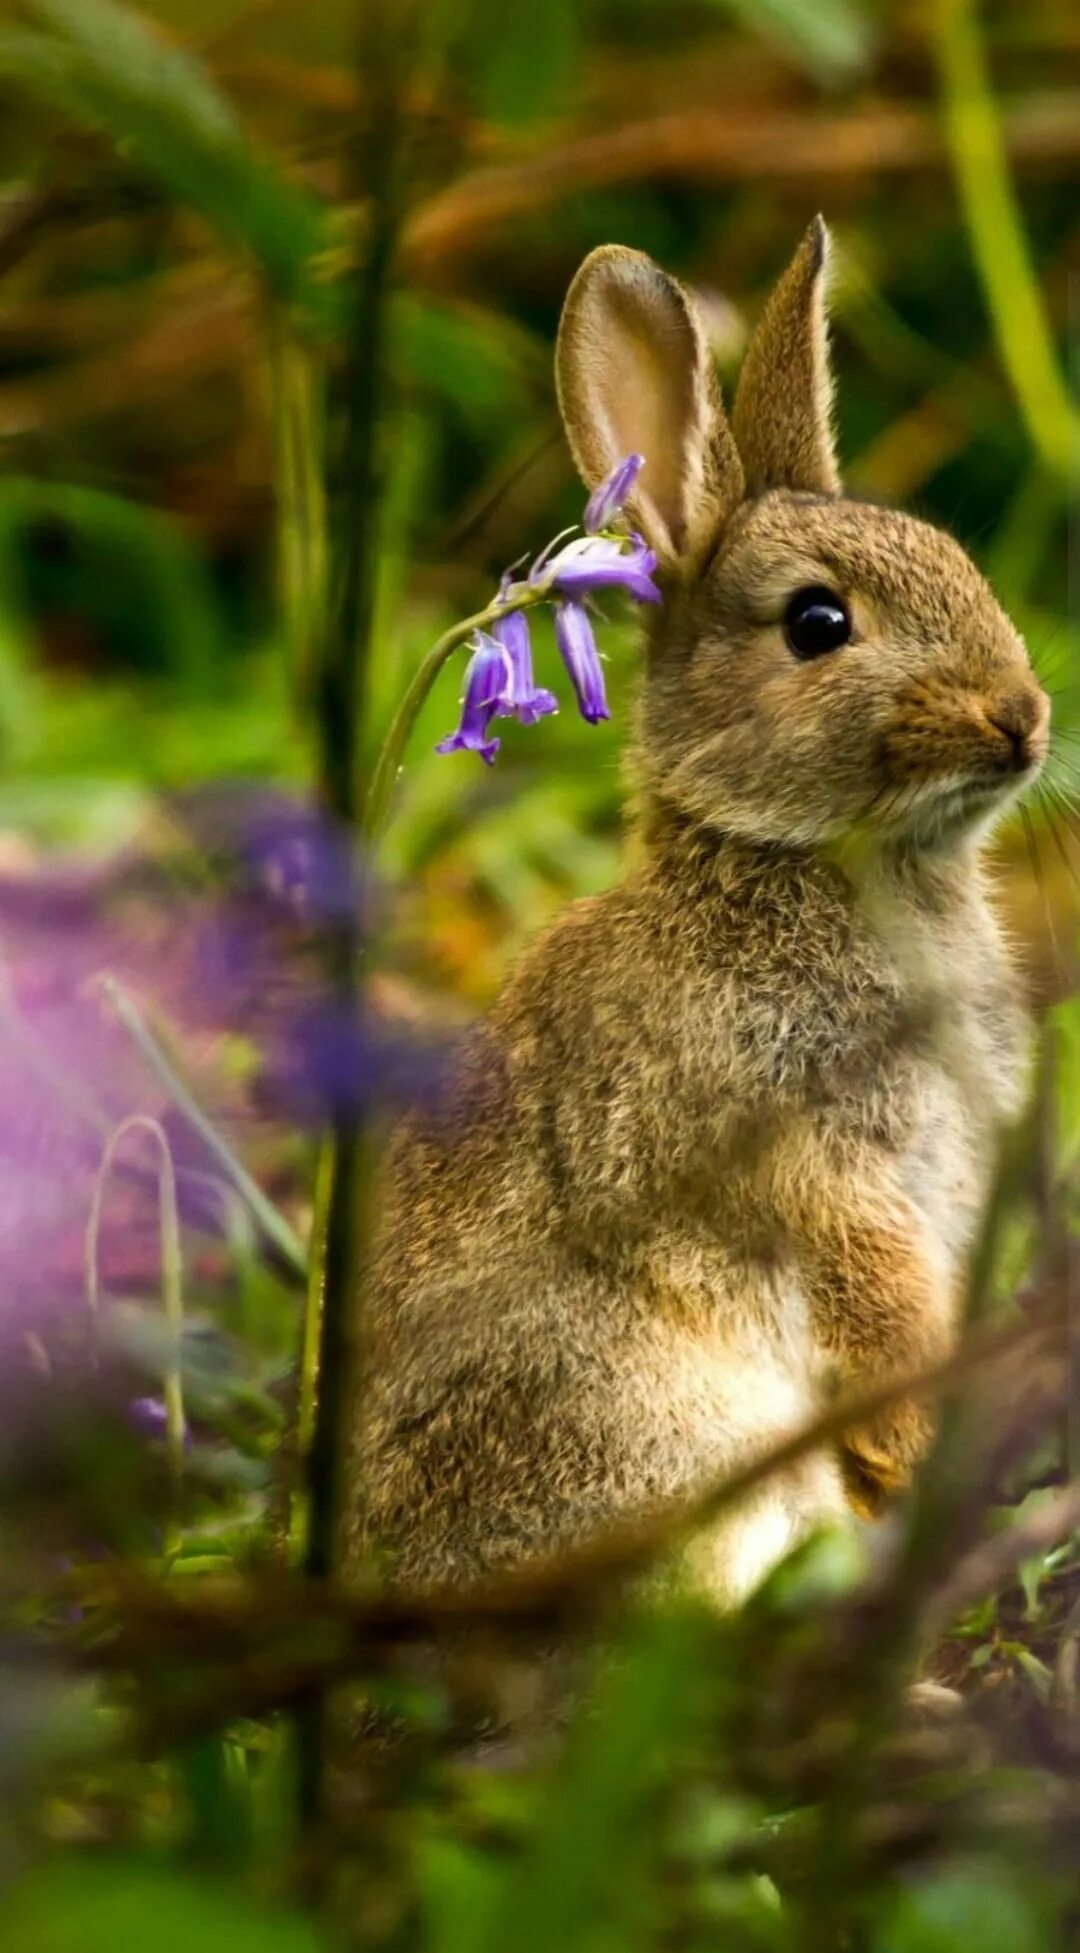 Зайчик зайчата. Заяц Русак с зайчатами. Заяц в лесу. Заяц летом. Природа и животные.